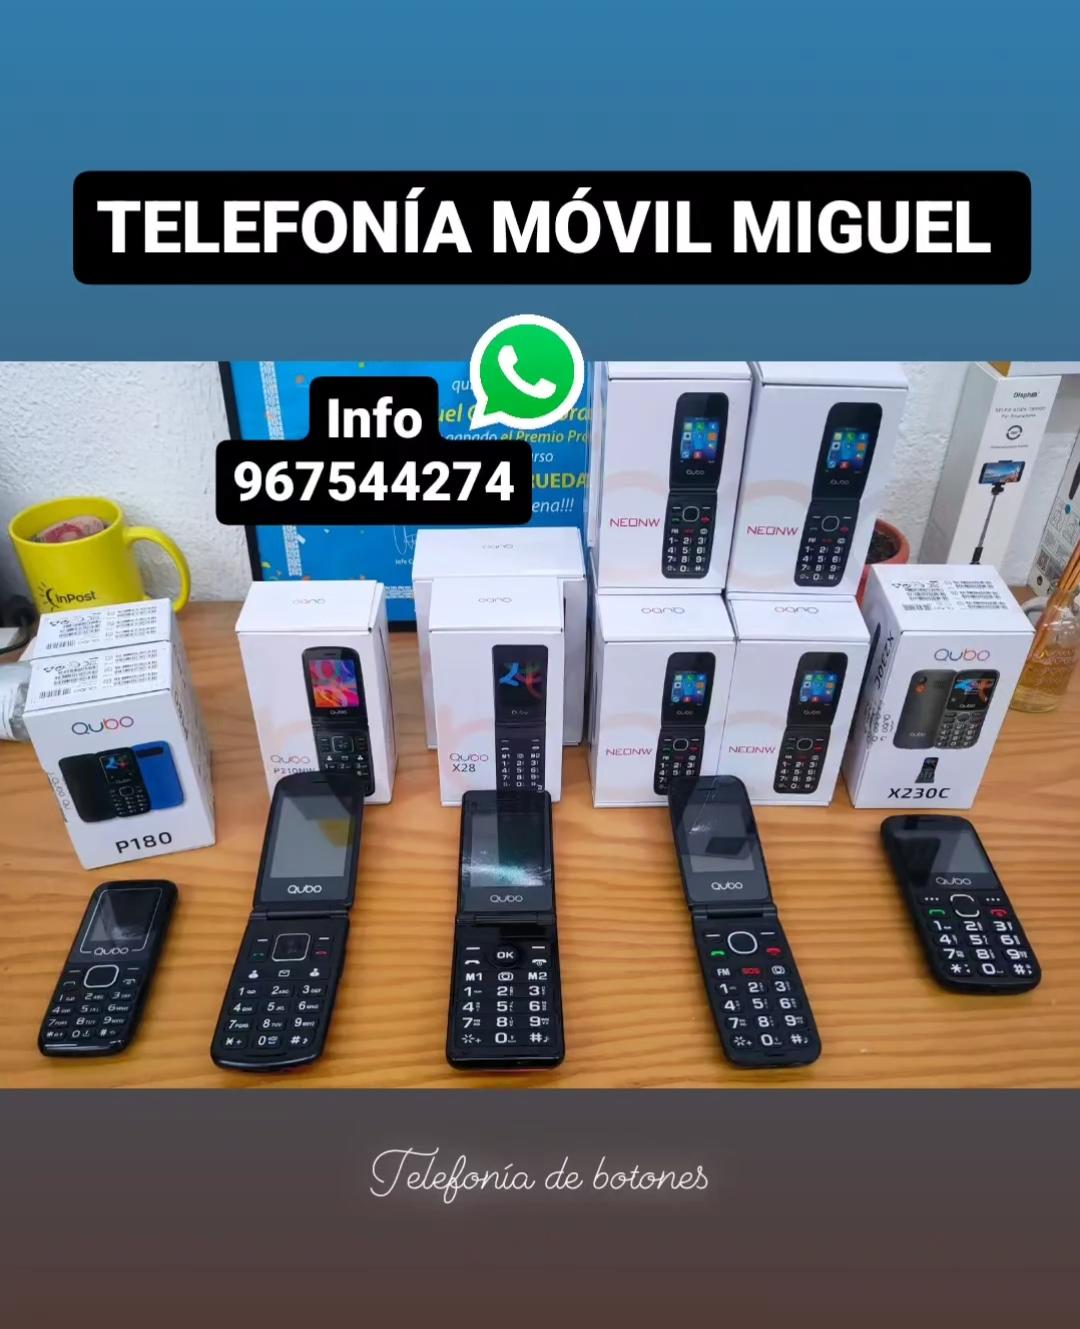 Images Telefonía Móvil Miguel